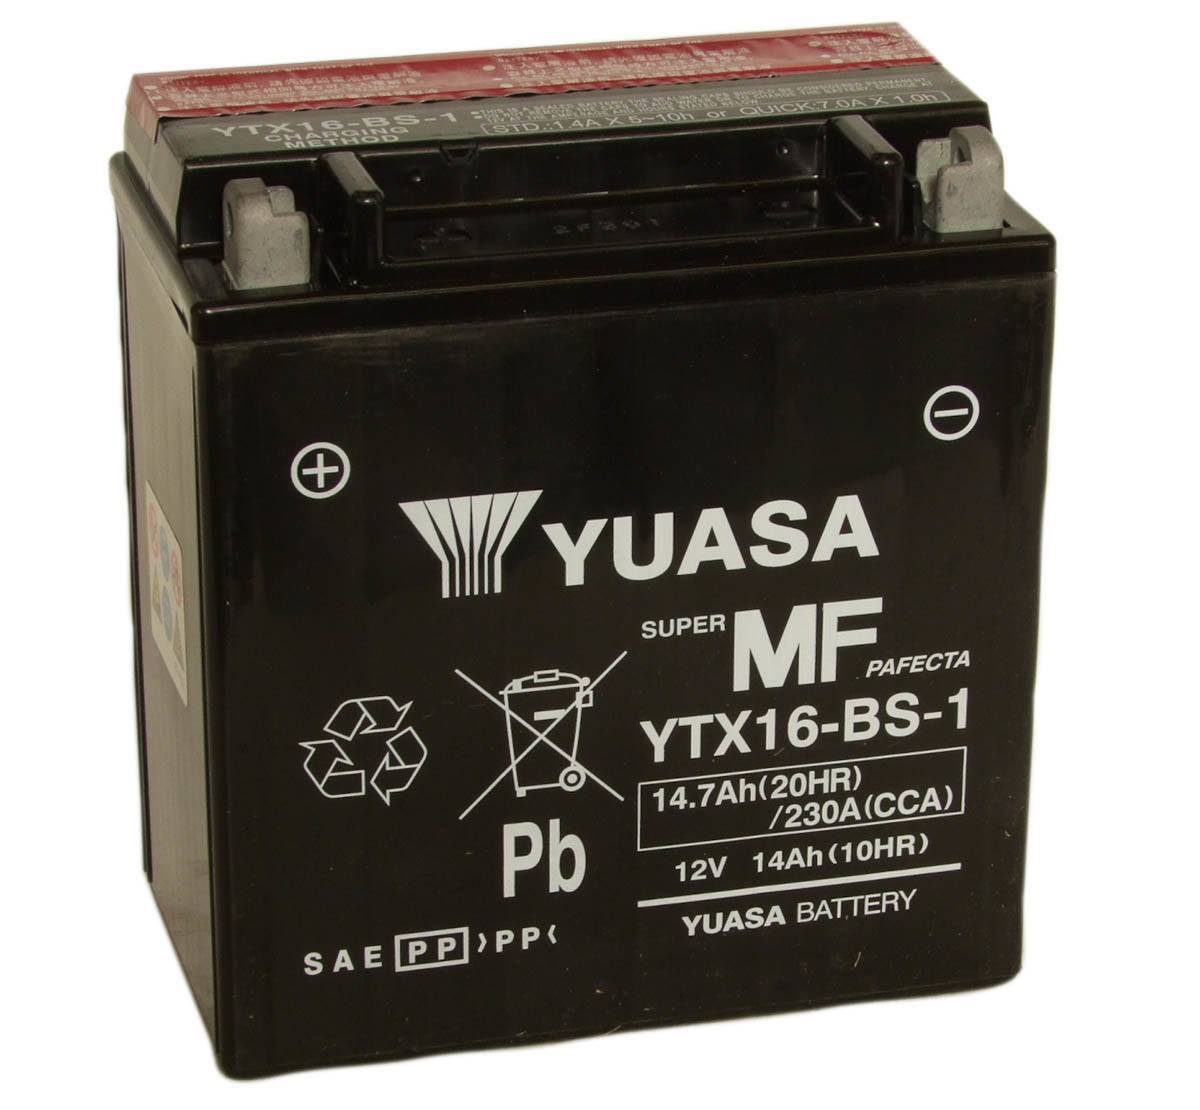 Yuasa YTX16-BS-1 12V Motorbike Battery